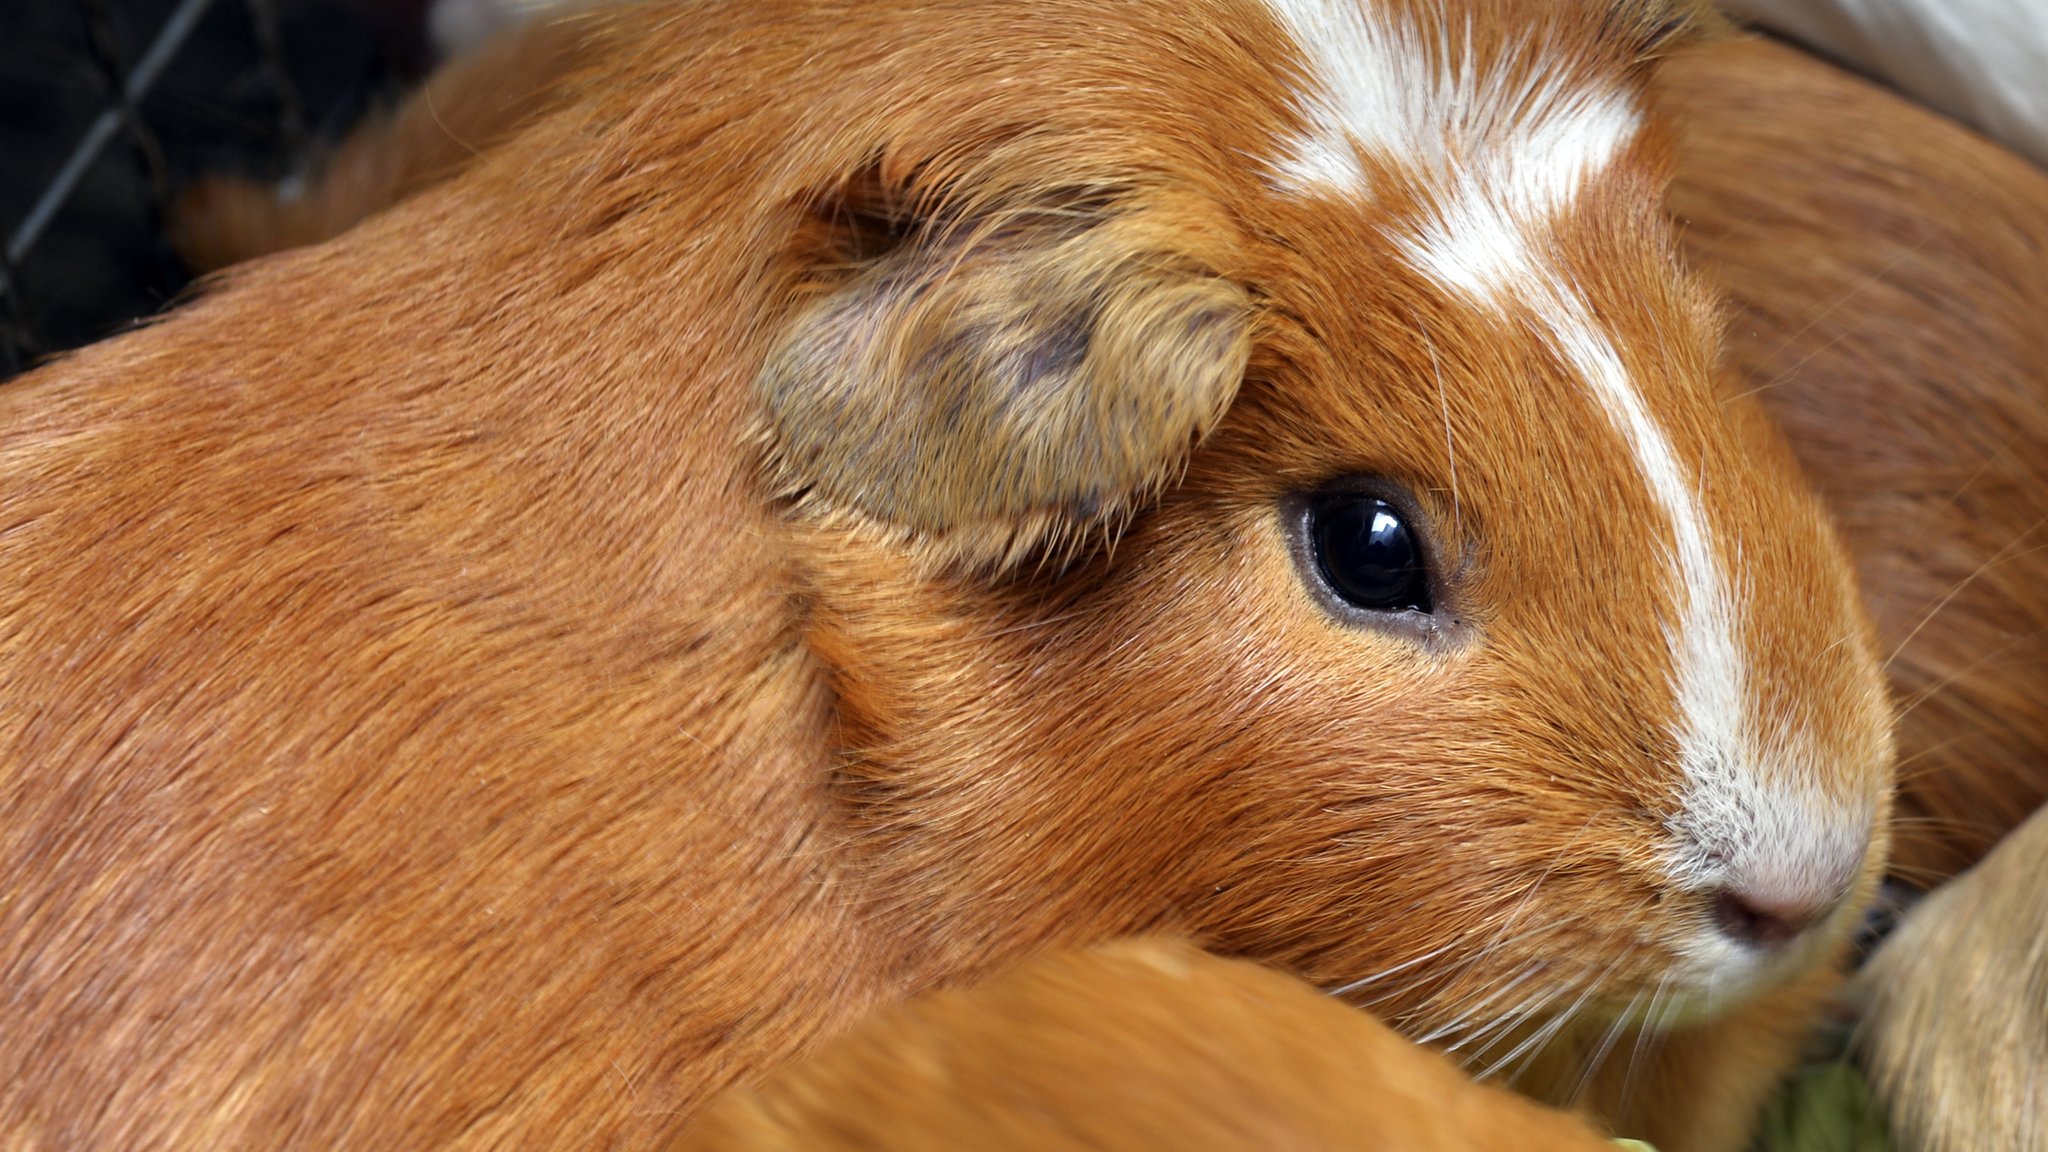 Guinea pigs: A popular Peruvian delicacy - BBC News